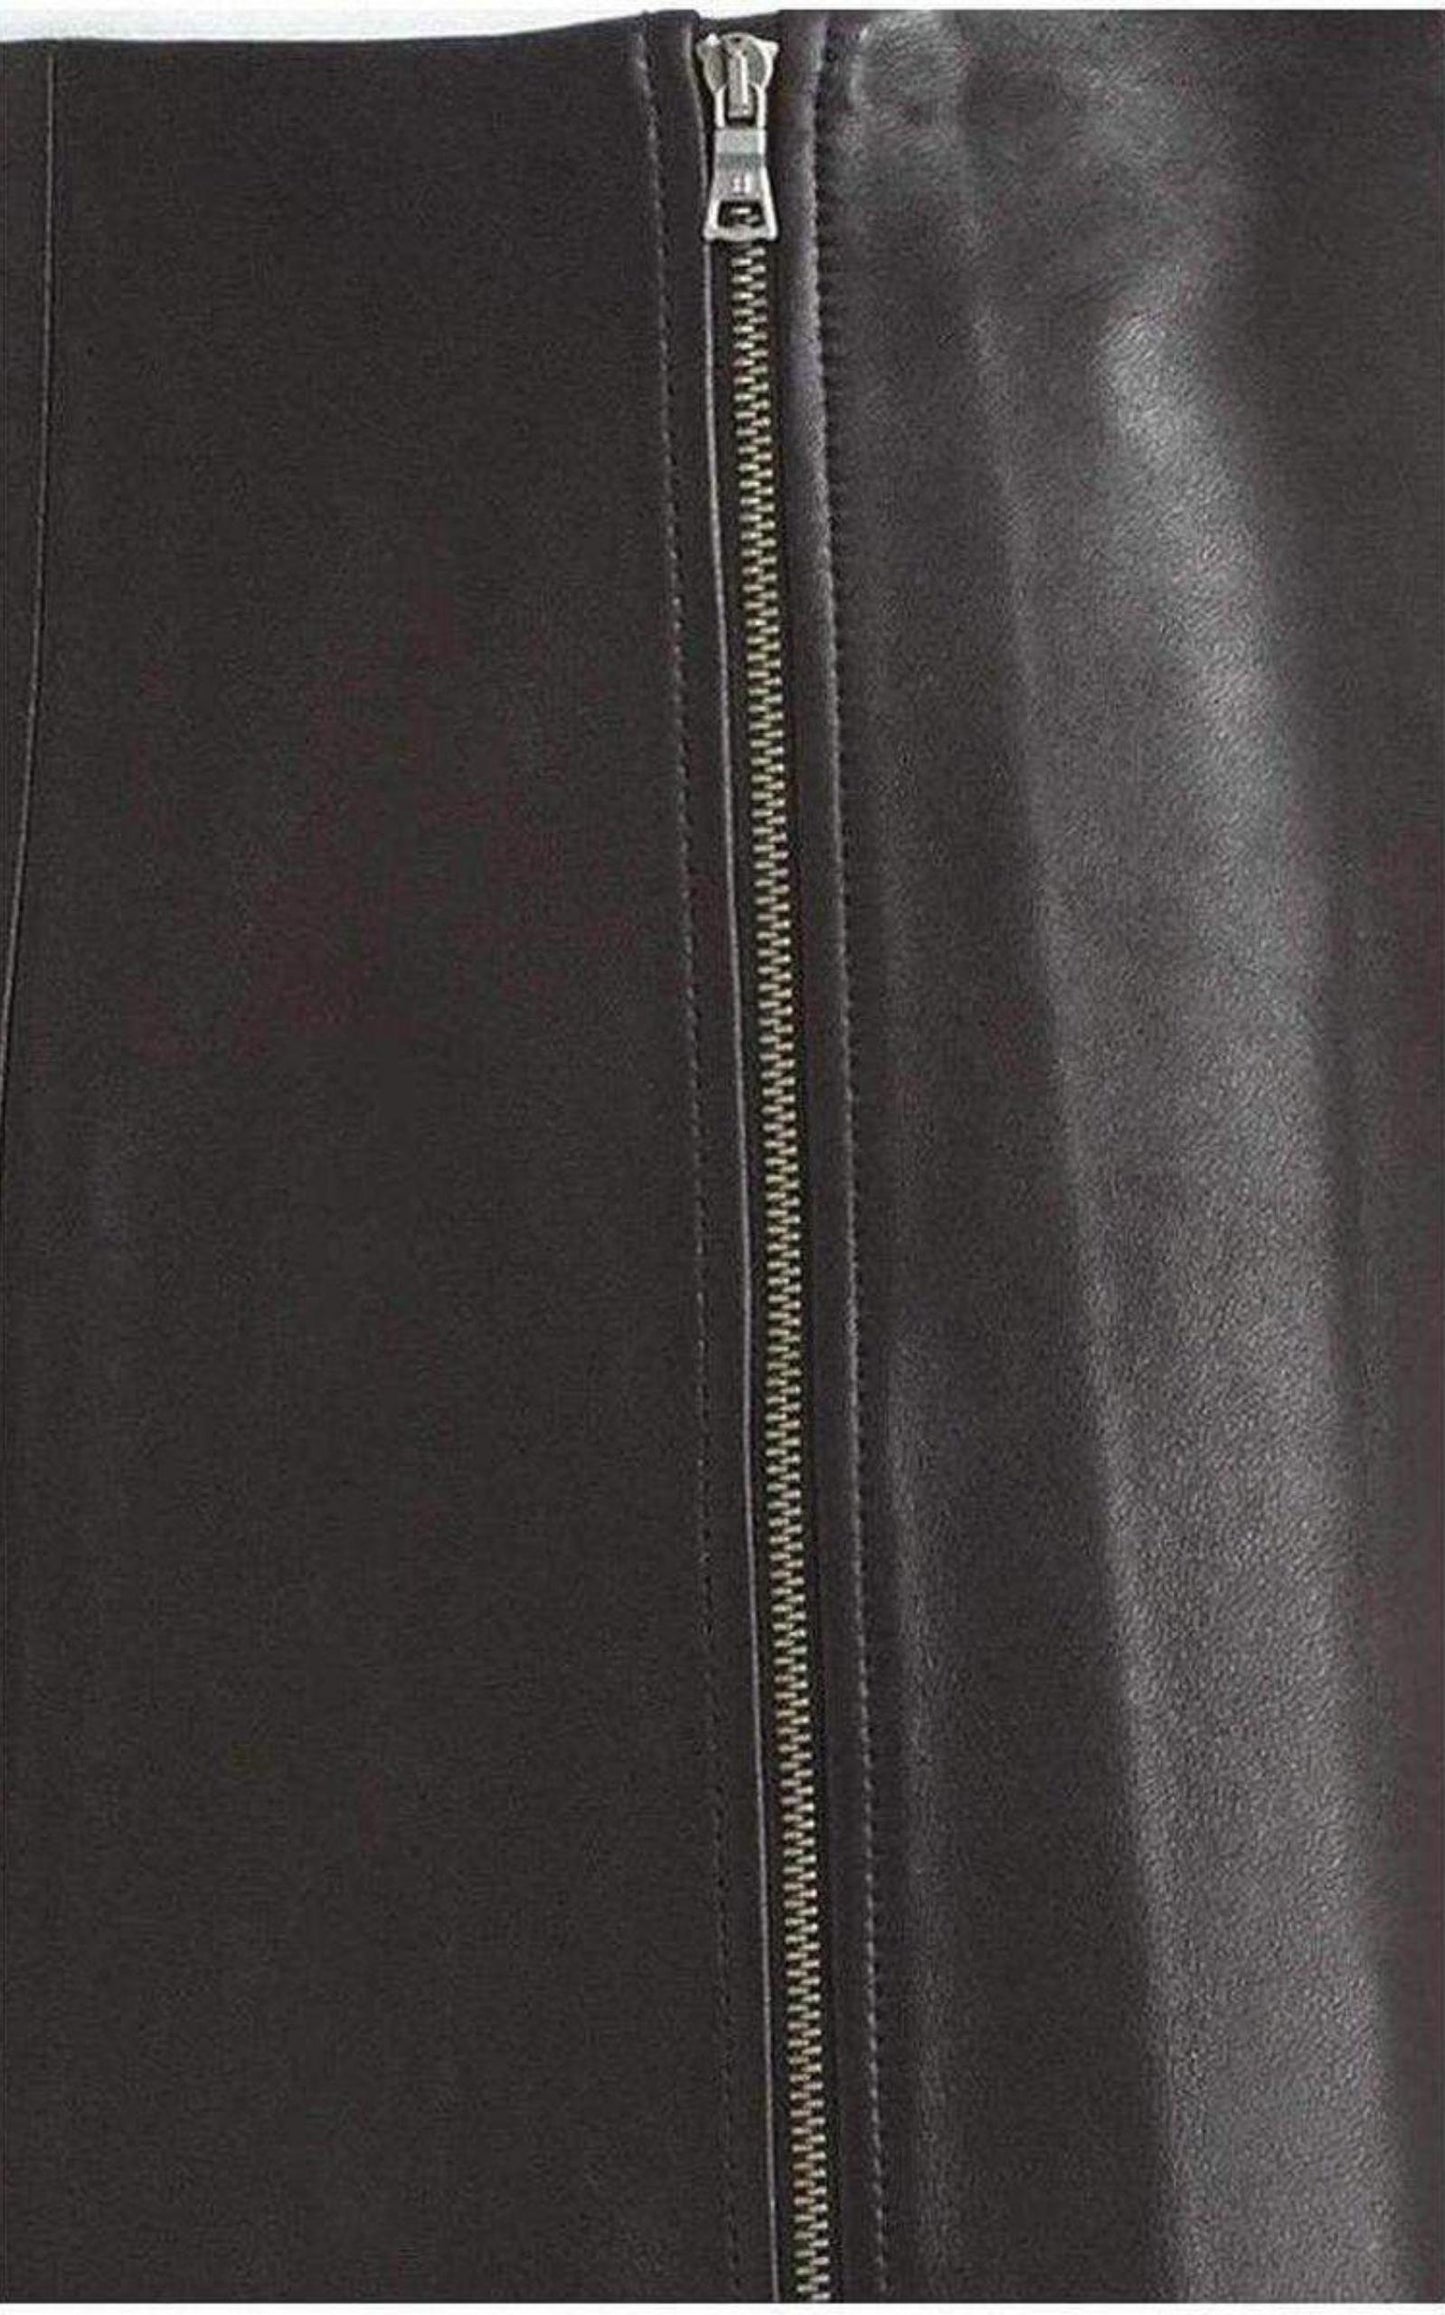  BCBGMAXAZRIAMyra Double Zipped Leather Mini Skirt - Runway Catalog